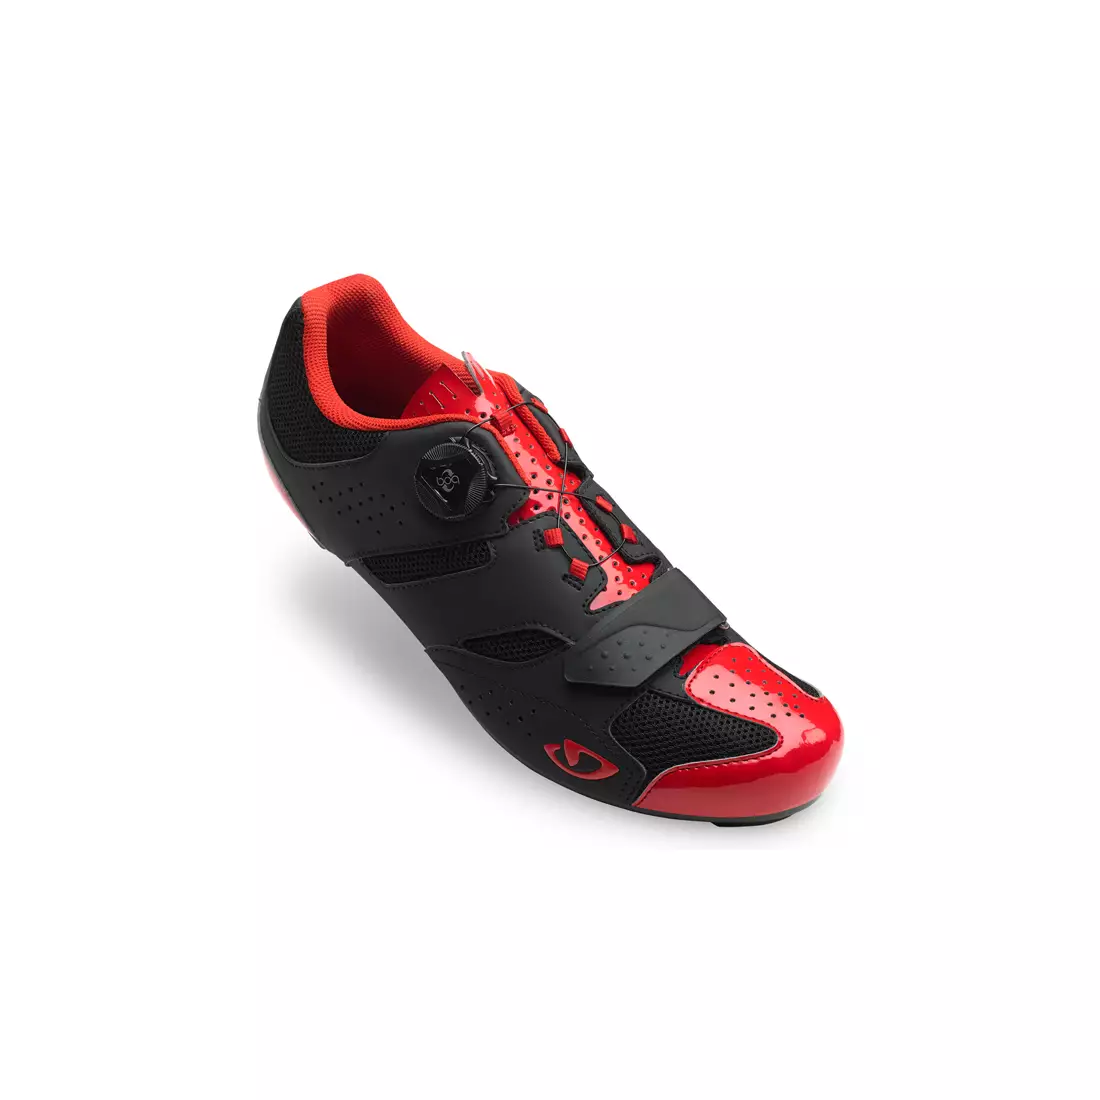 Pánska cyklistická obuv GIRO SAVIX bright red black 